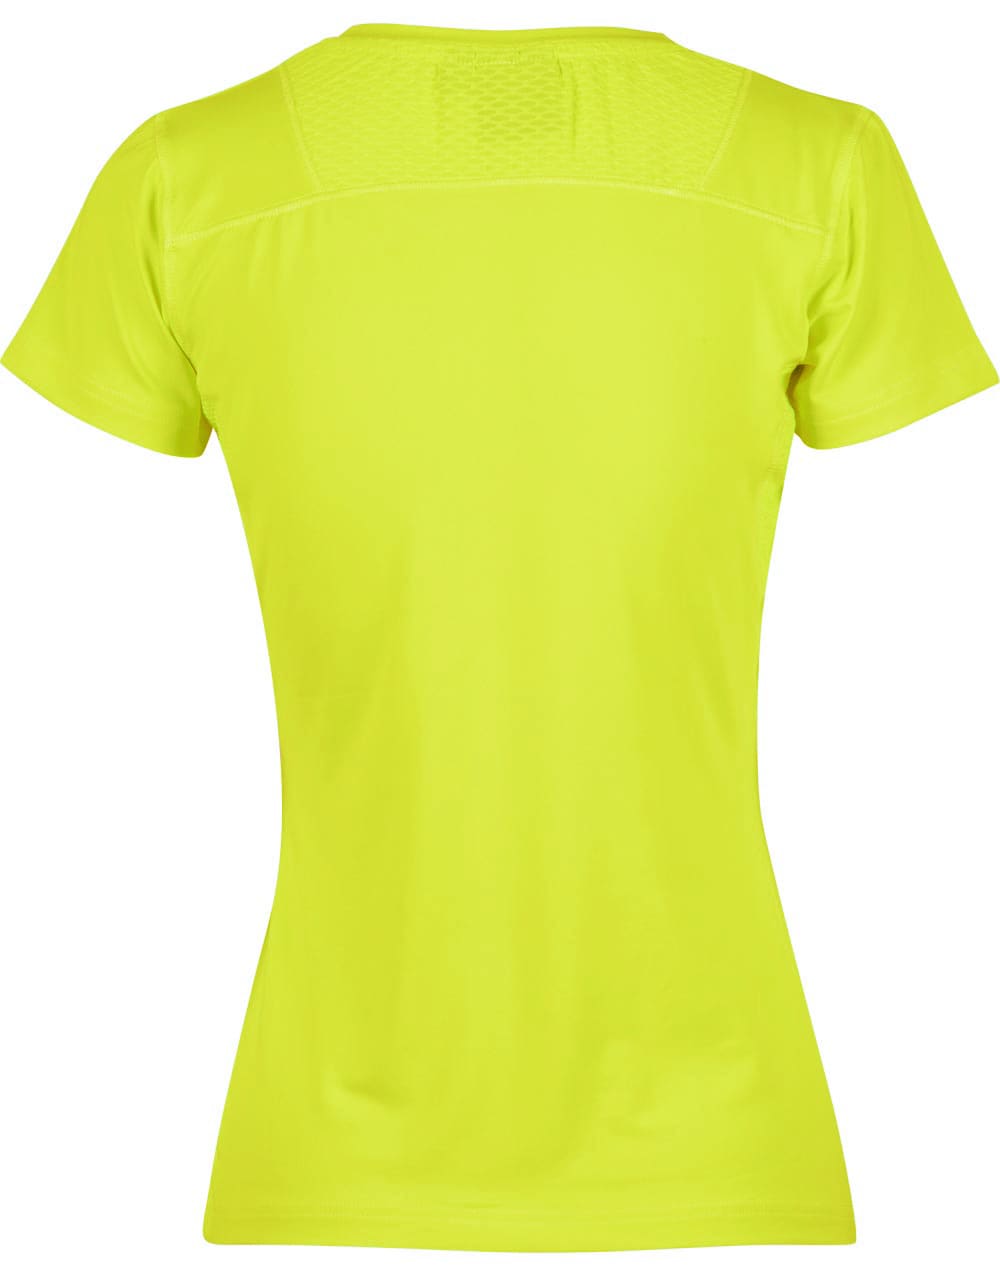 Ladies CoolDry Stretch Tee Shirt TS30 | 